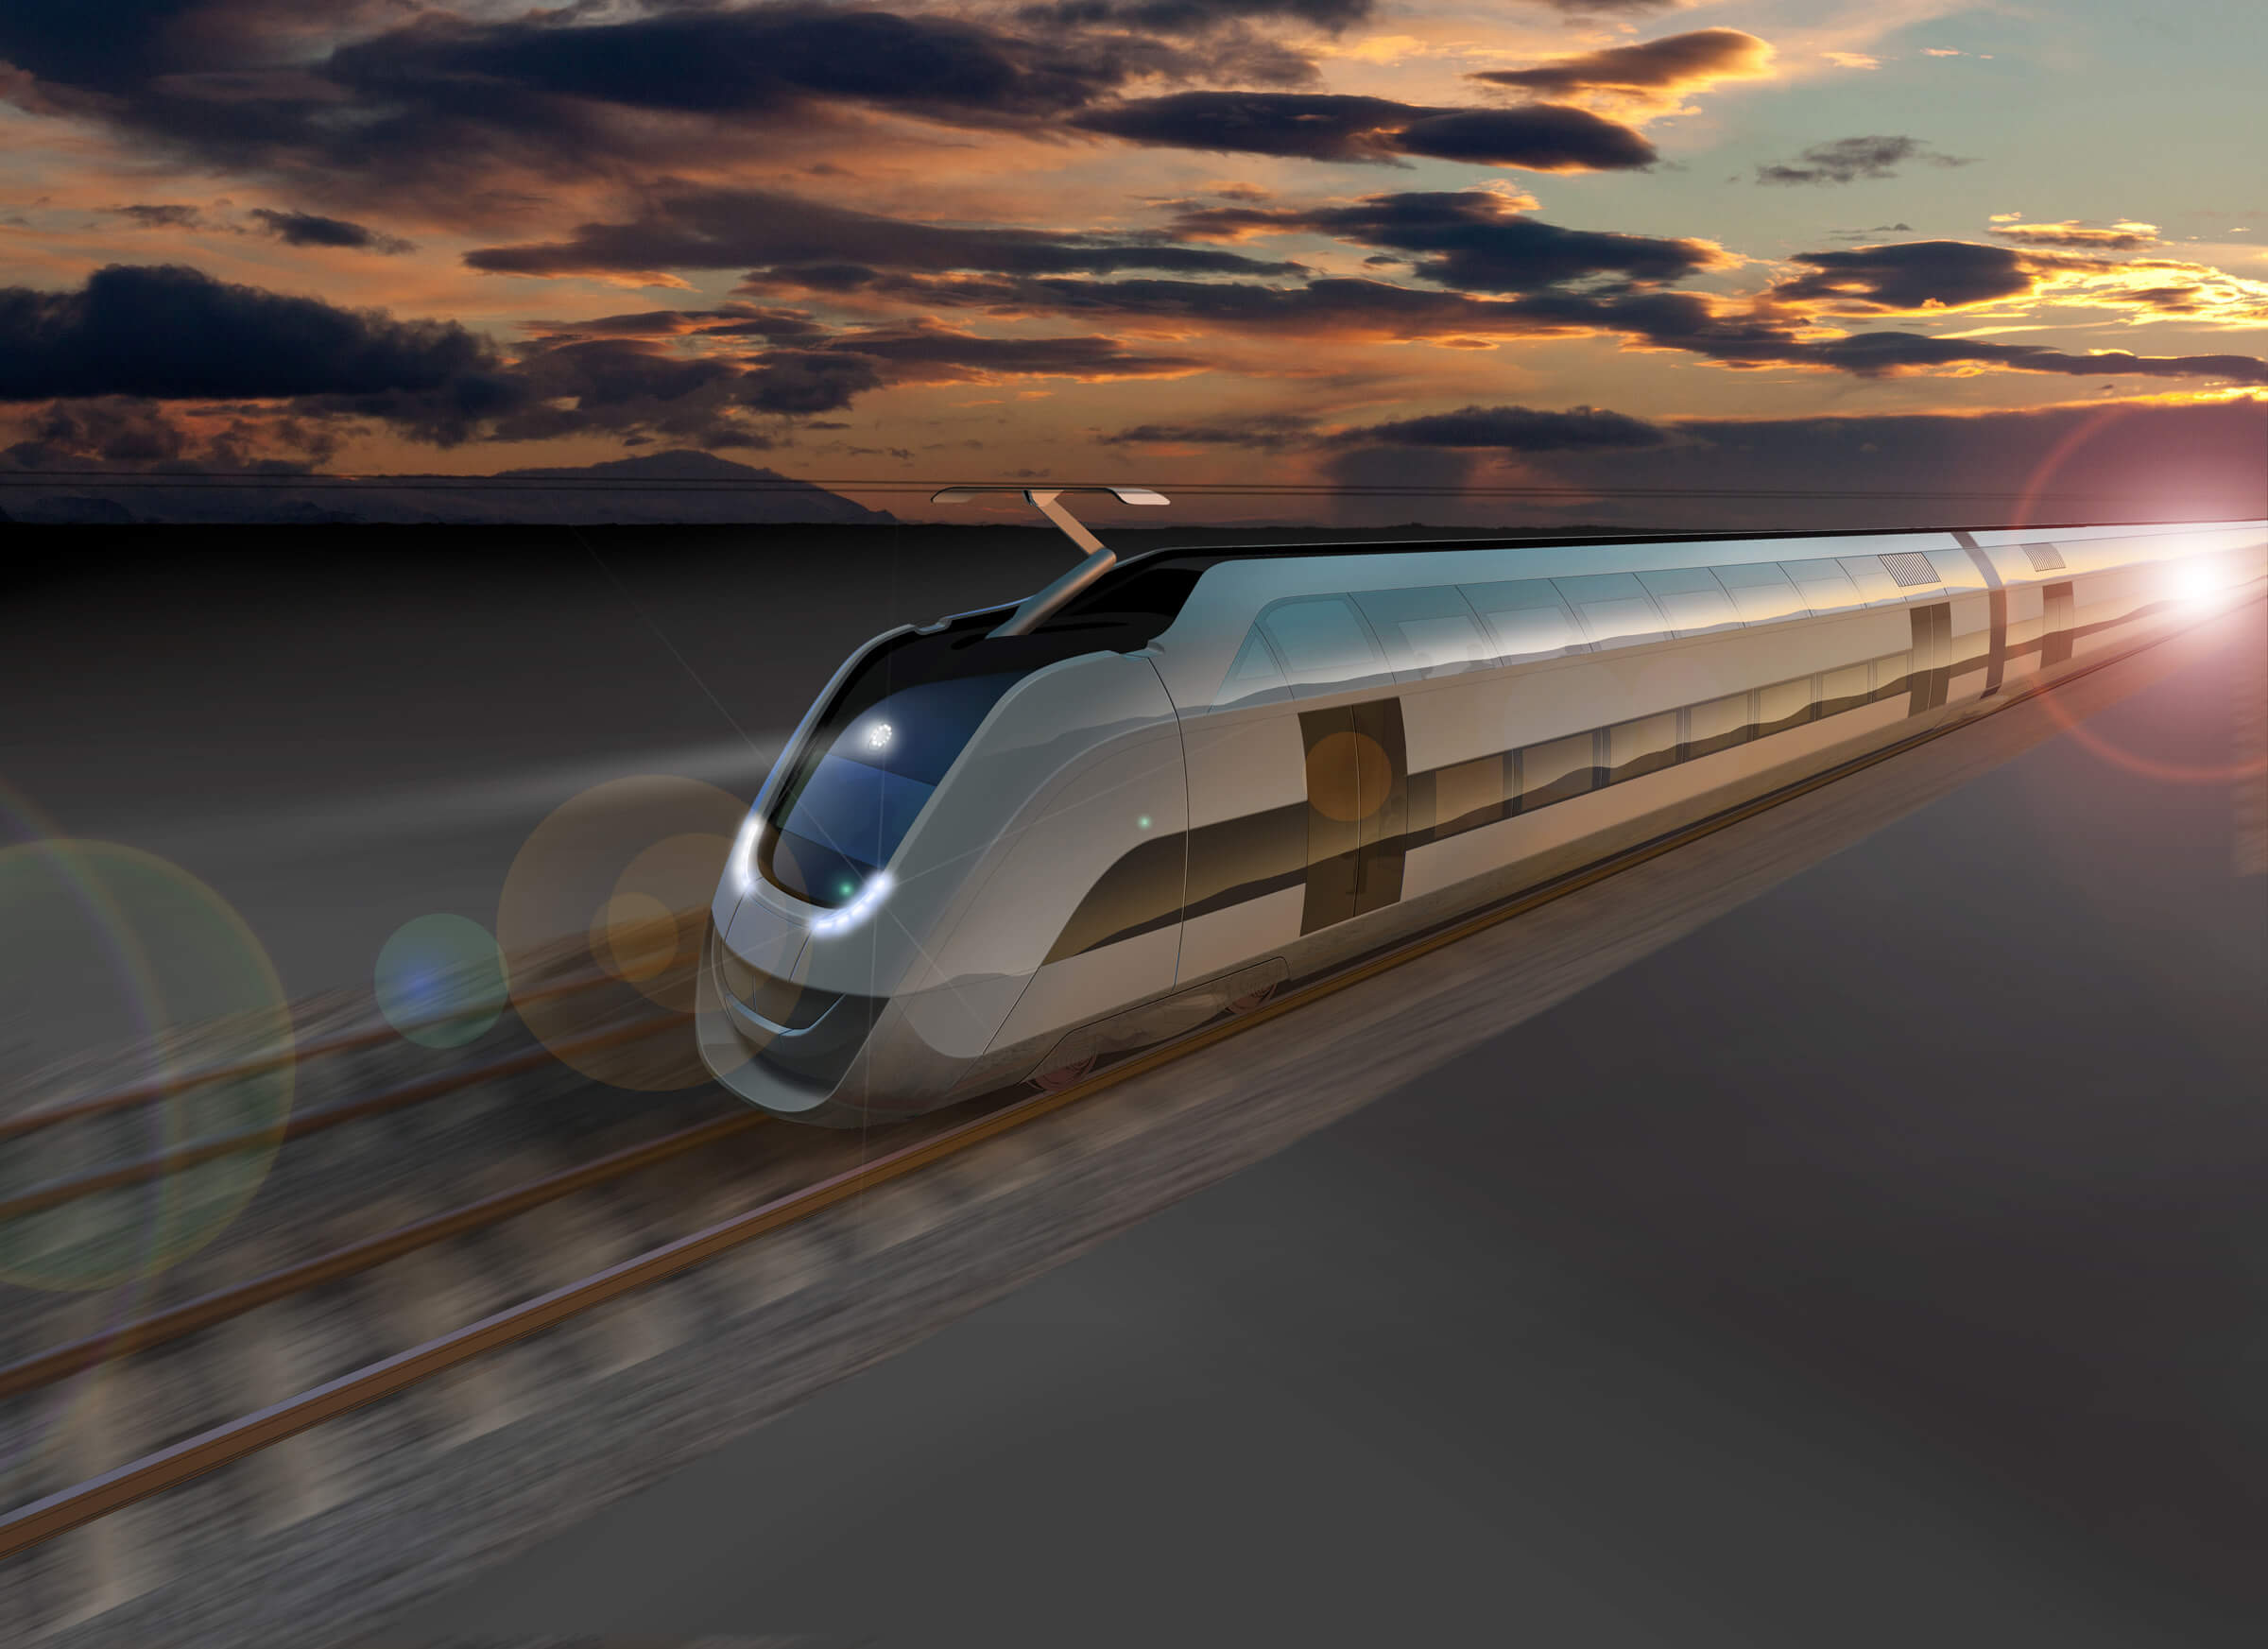 Sustainable train 2025 Intercity interior artist impression